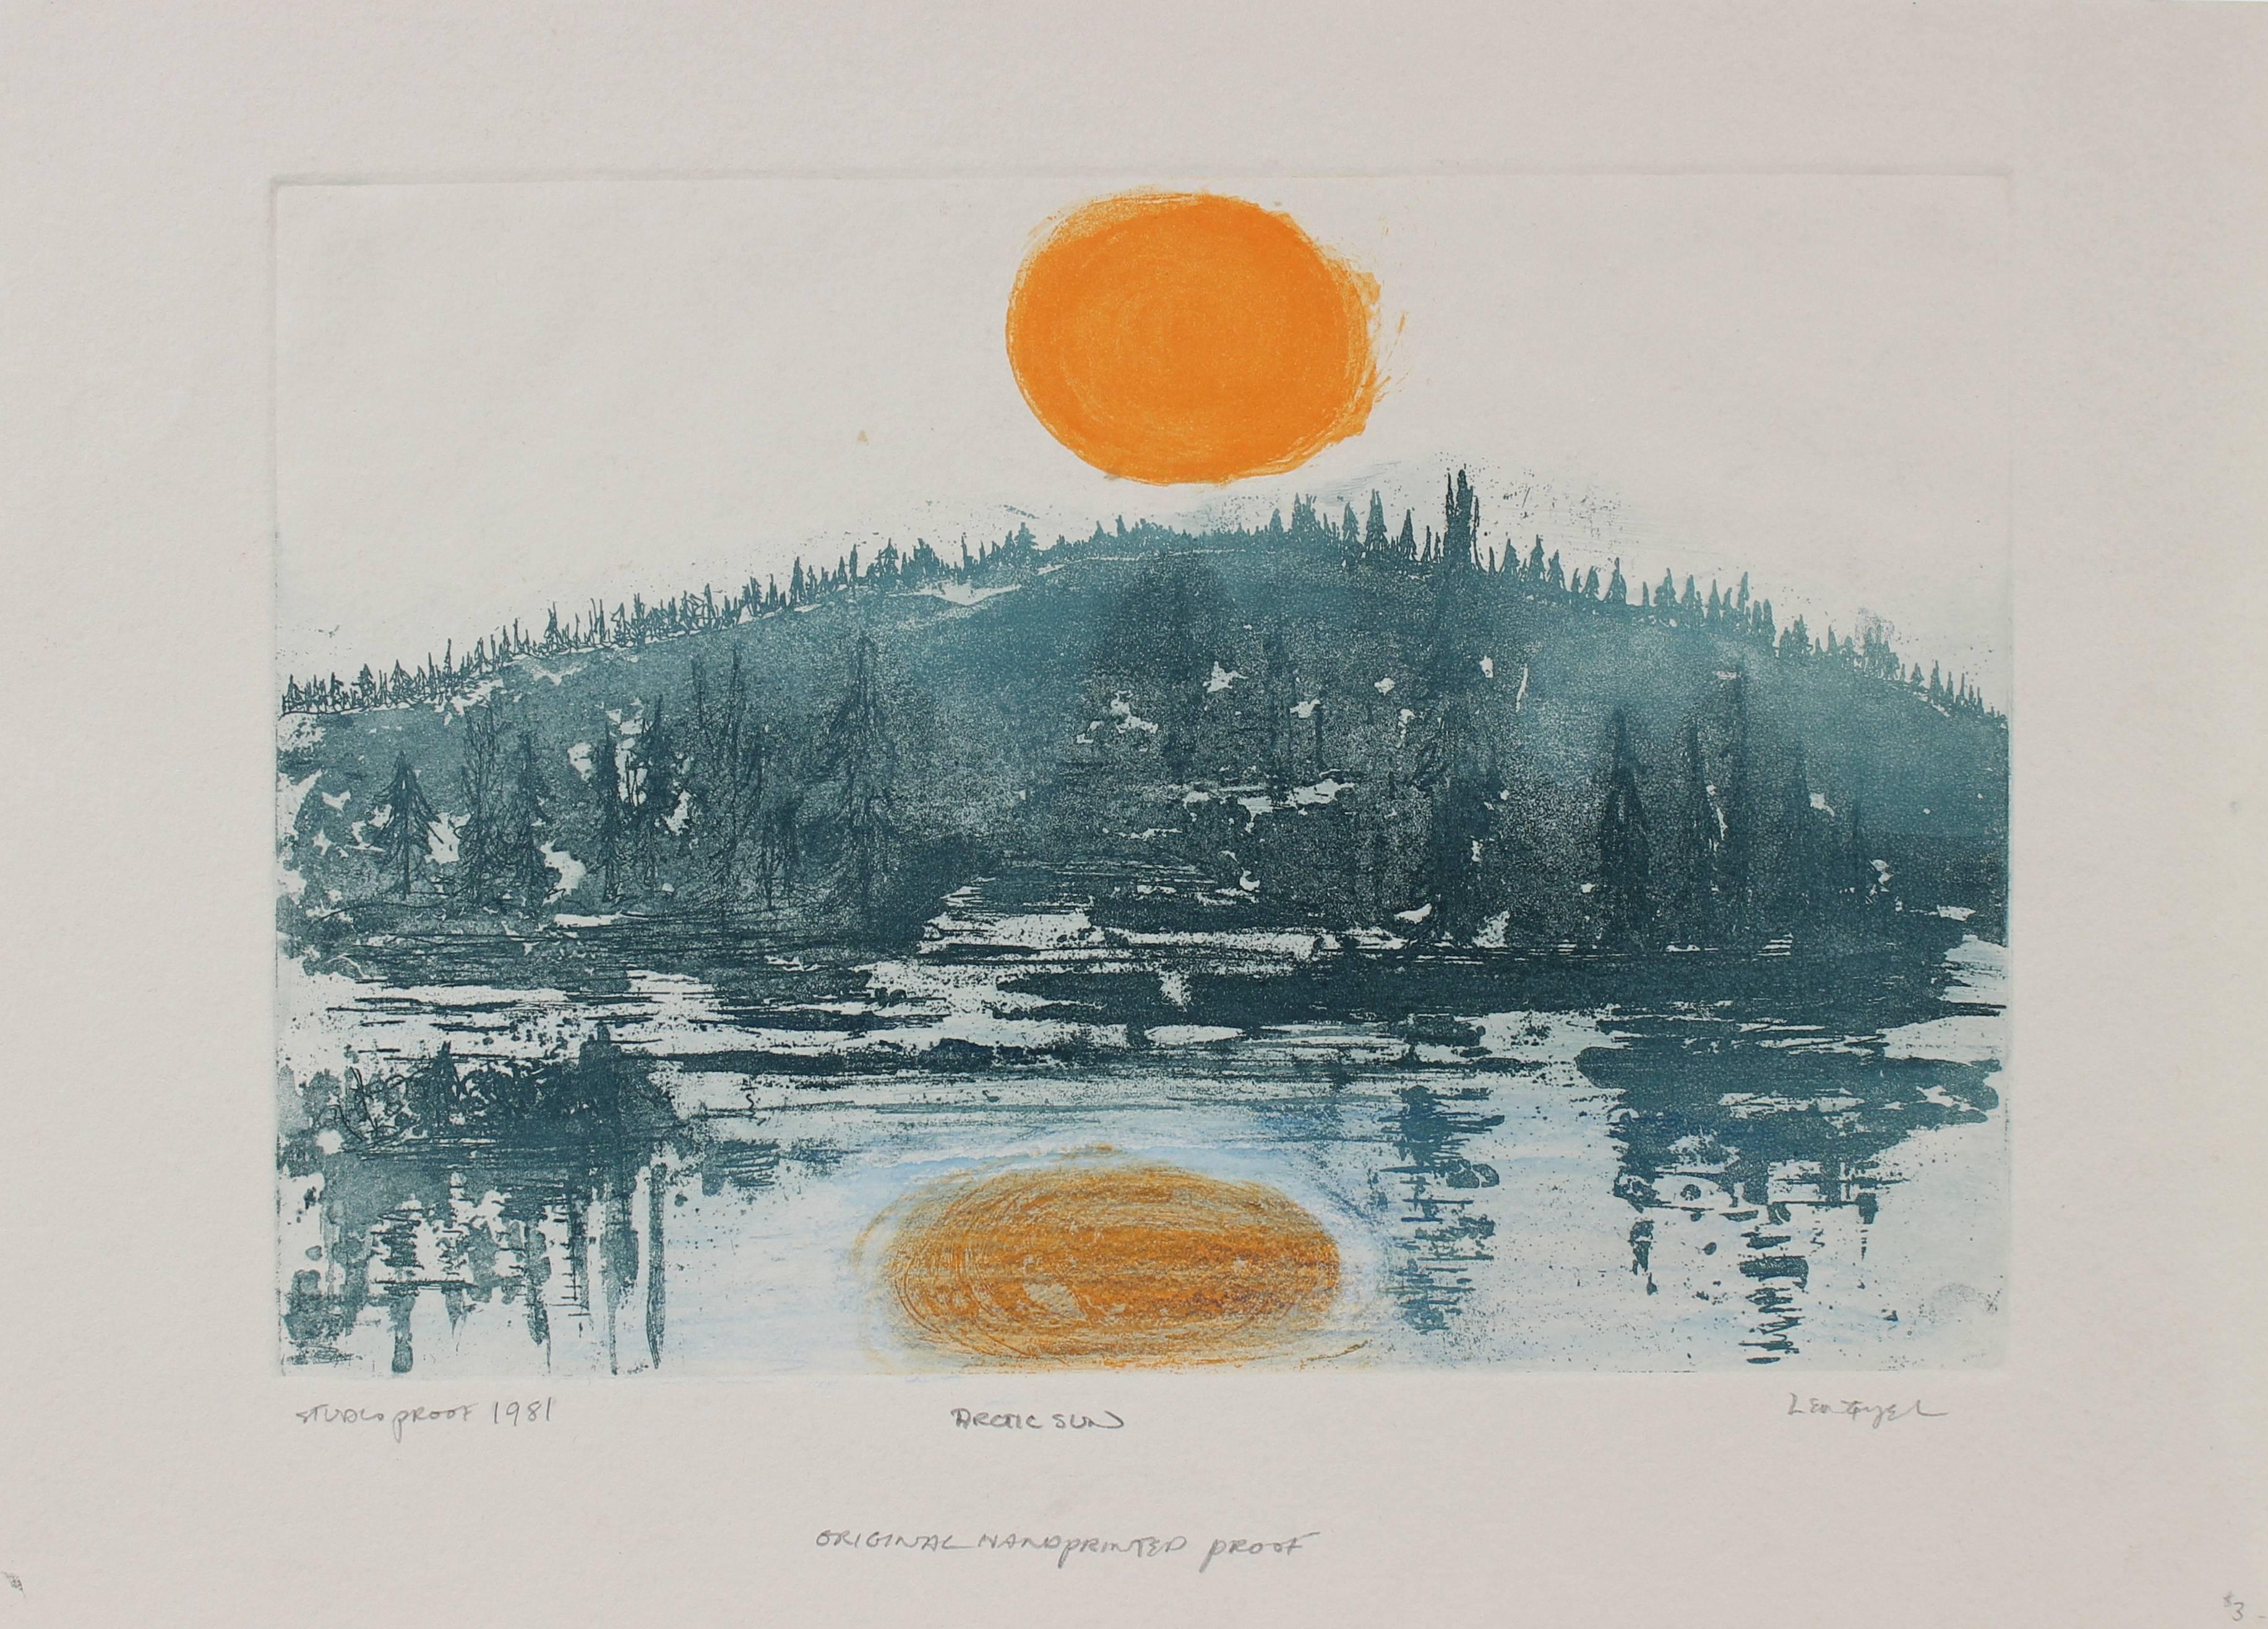 Laura Lengyel Landscape Print - "Arctic Sun" Mountain Lake Scene, 1981